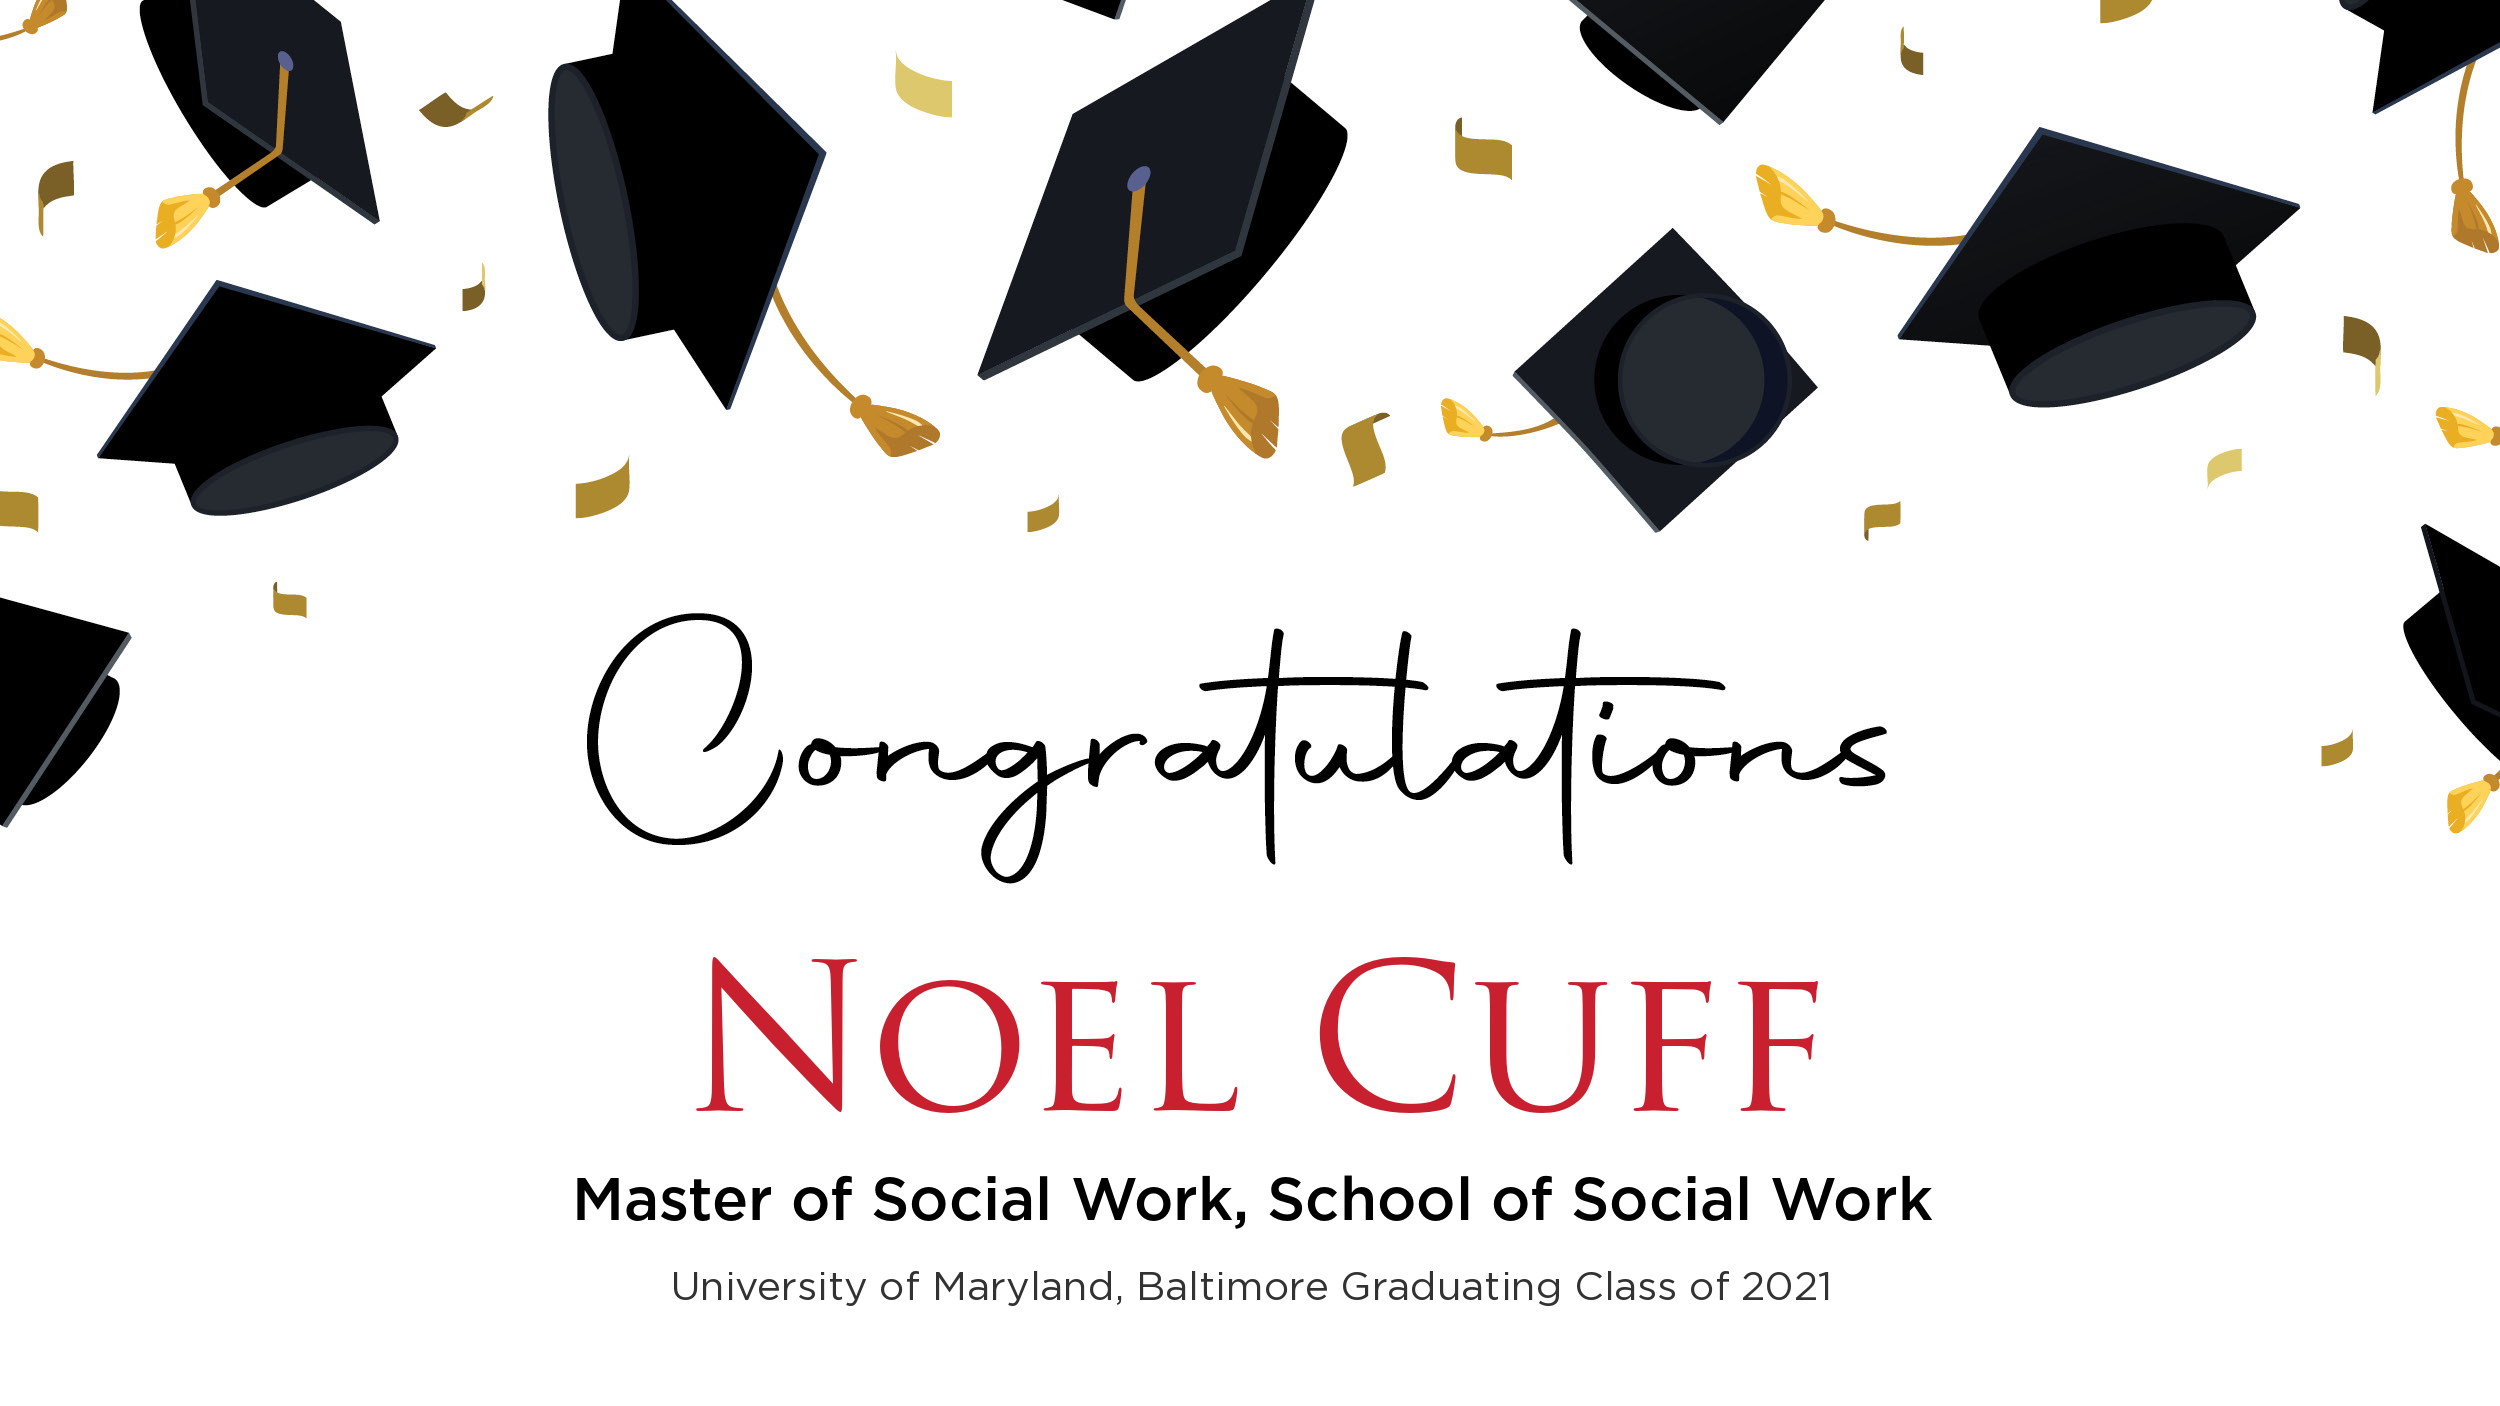 Congratulations Noel Cuff, Master of Social Work